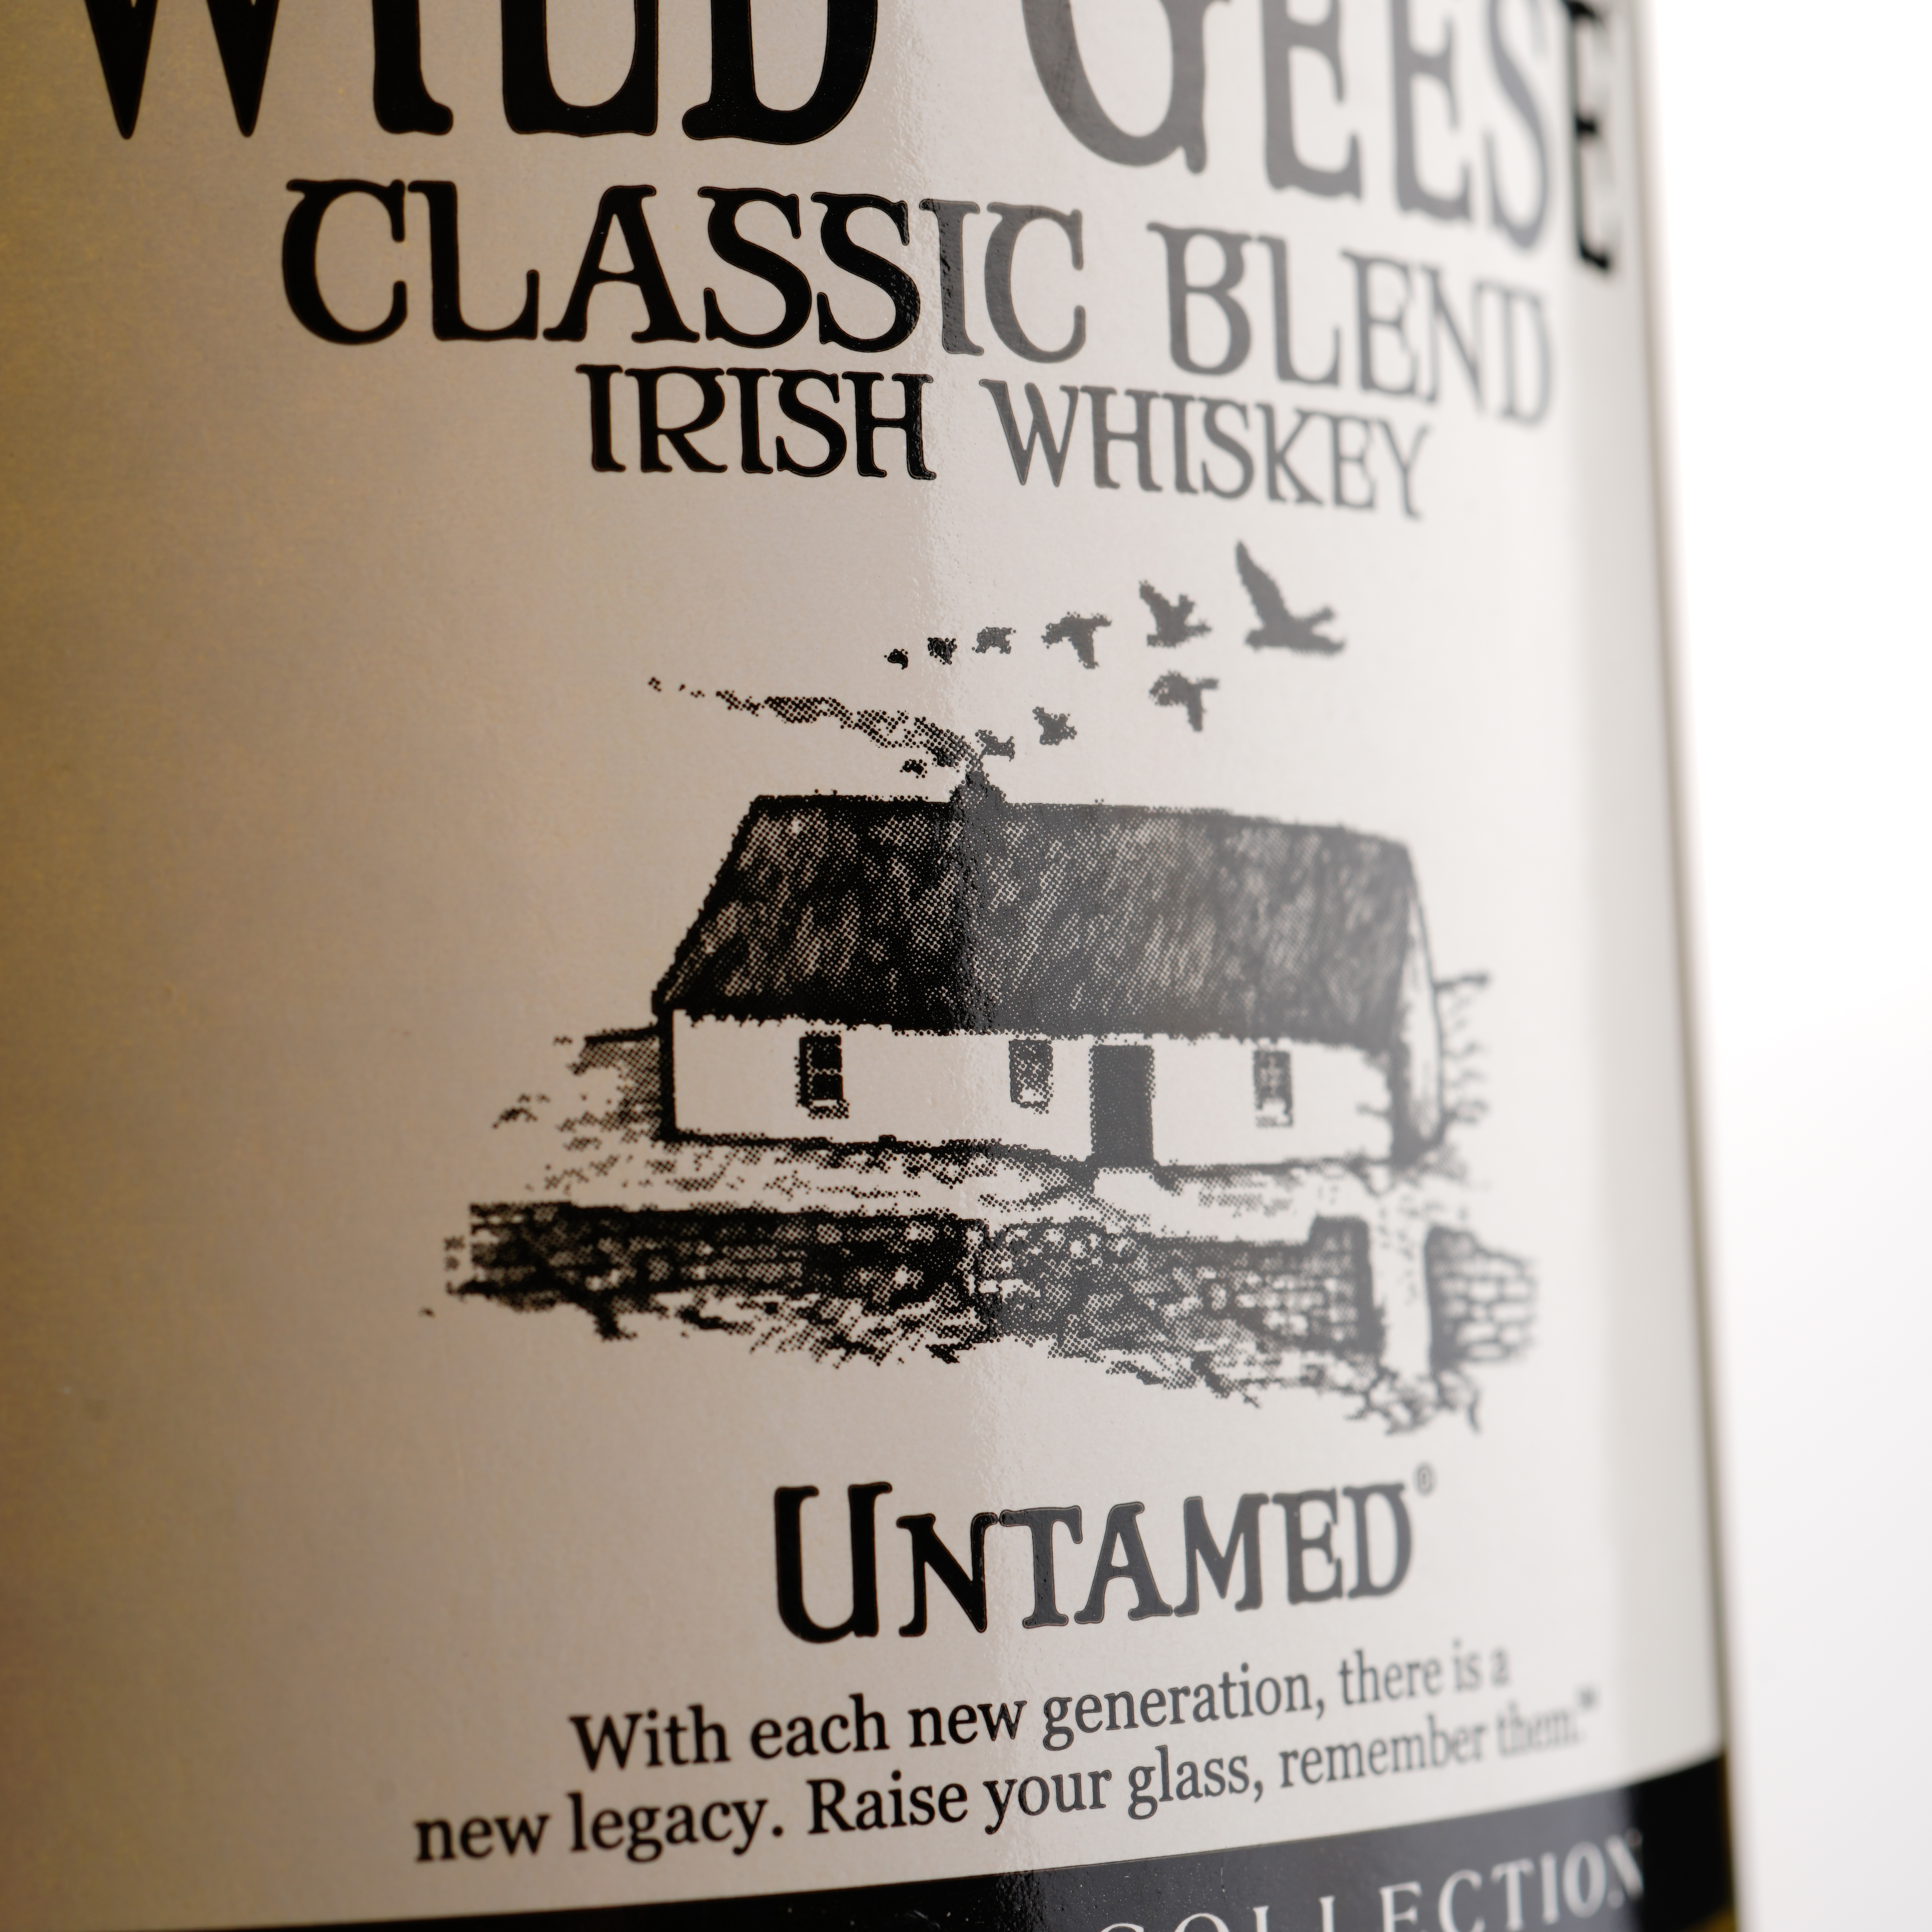 Виски The Wild Geese Classic Blend Irish Whiskey, 40%, 0,7 л (566233) - фото 3